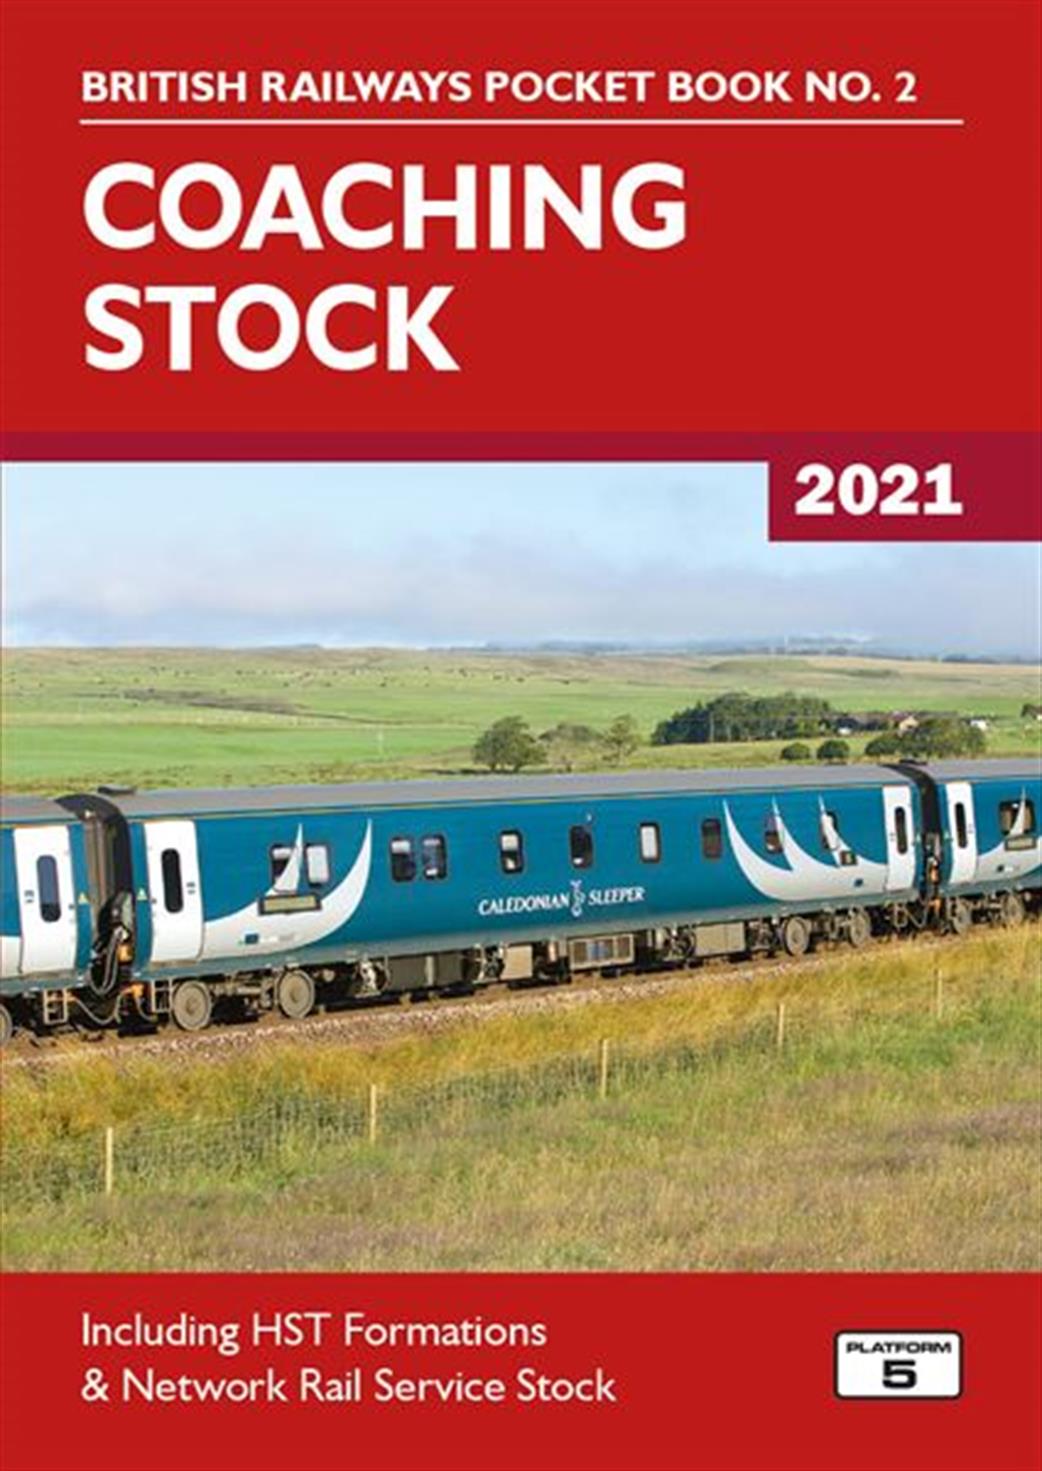 Platform 5 BRPB2 21 British Railways Coaching Stock 2021 Pocket Book